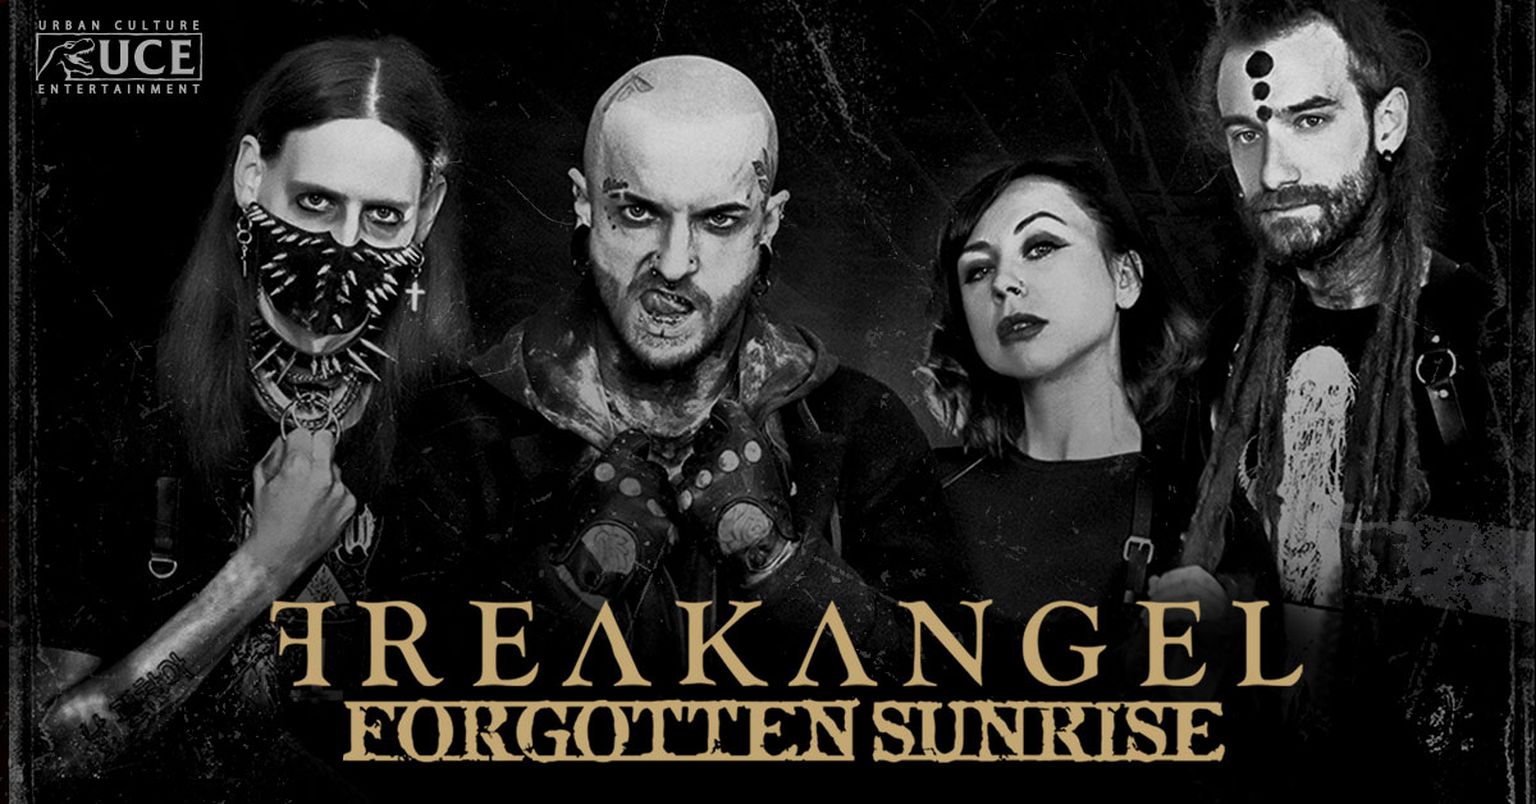 Freakangel ja Forgotten Sunrise annavad kontserdi.